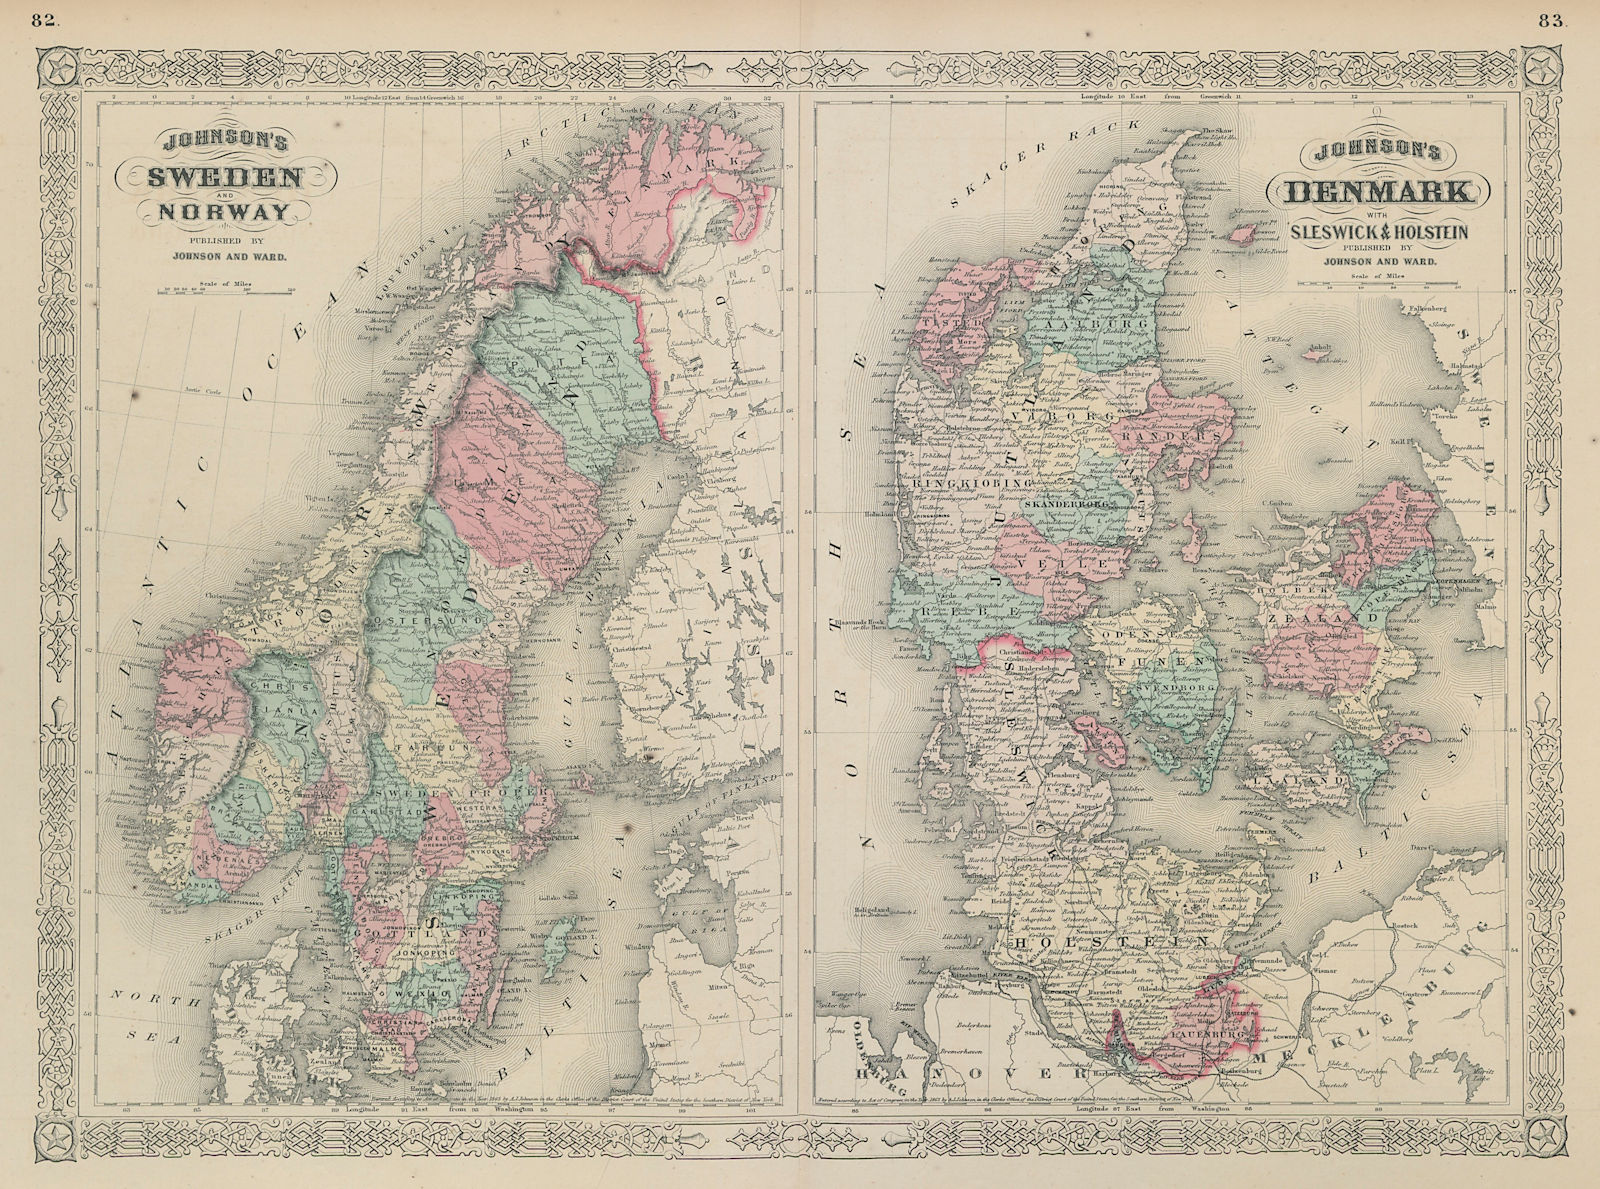 Associate Product Johnson's Sweden, Norway & Denmark with Sleswick & Holstein. Schleswig 1865 map